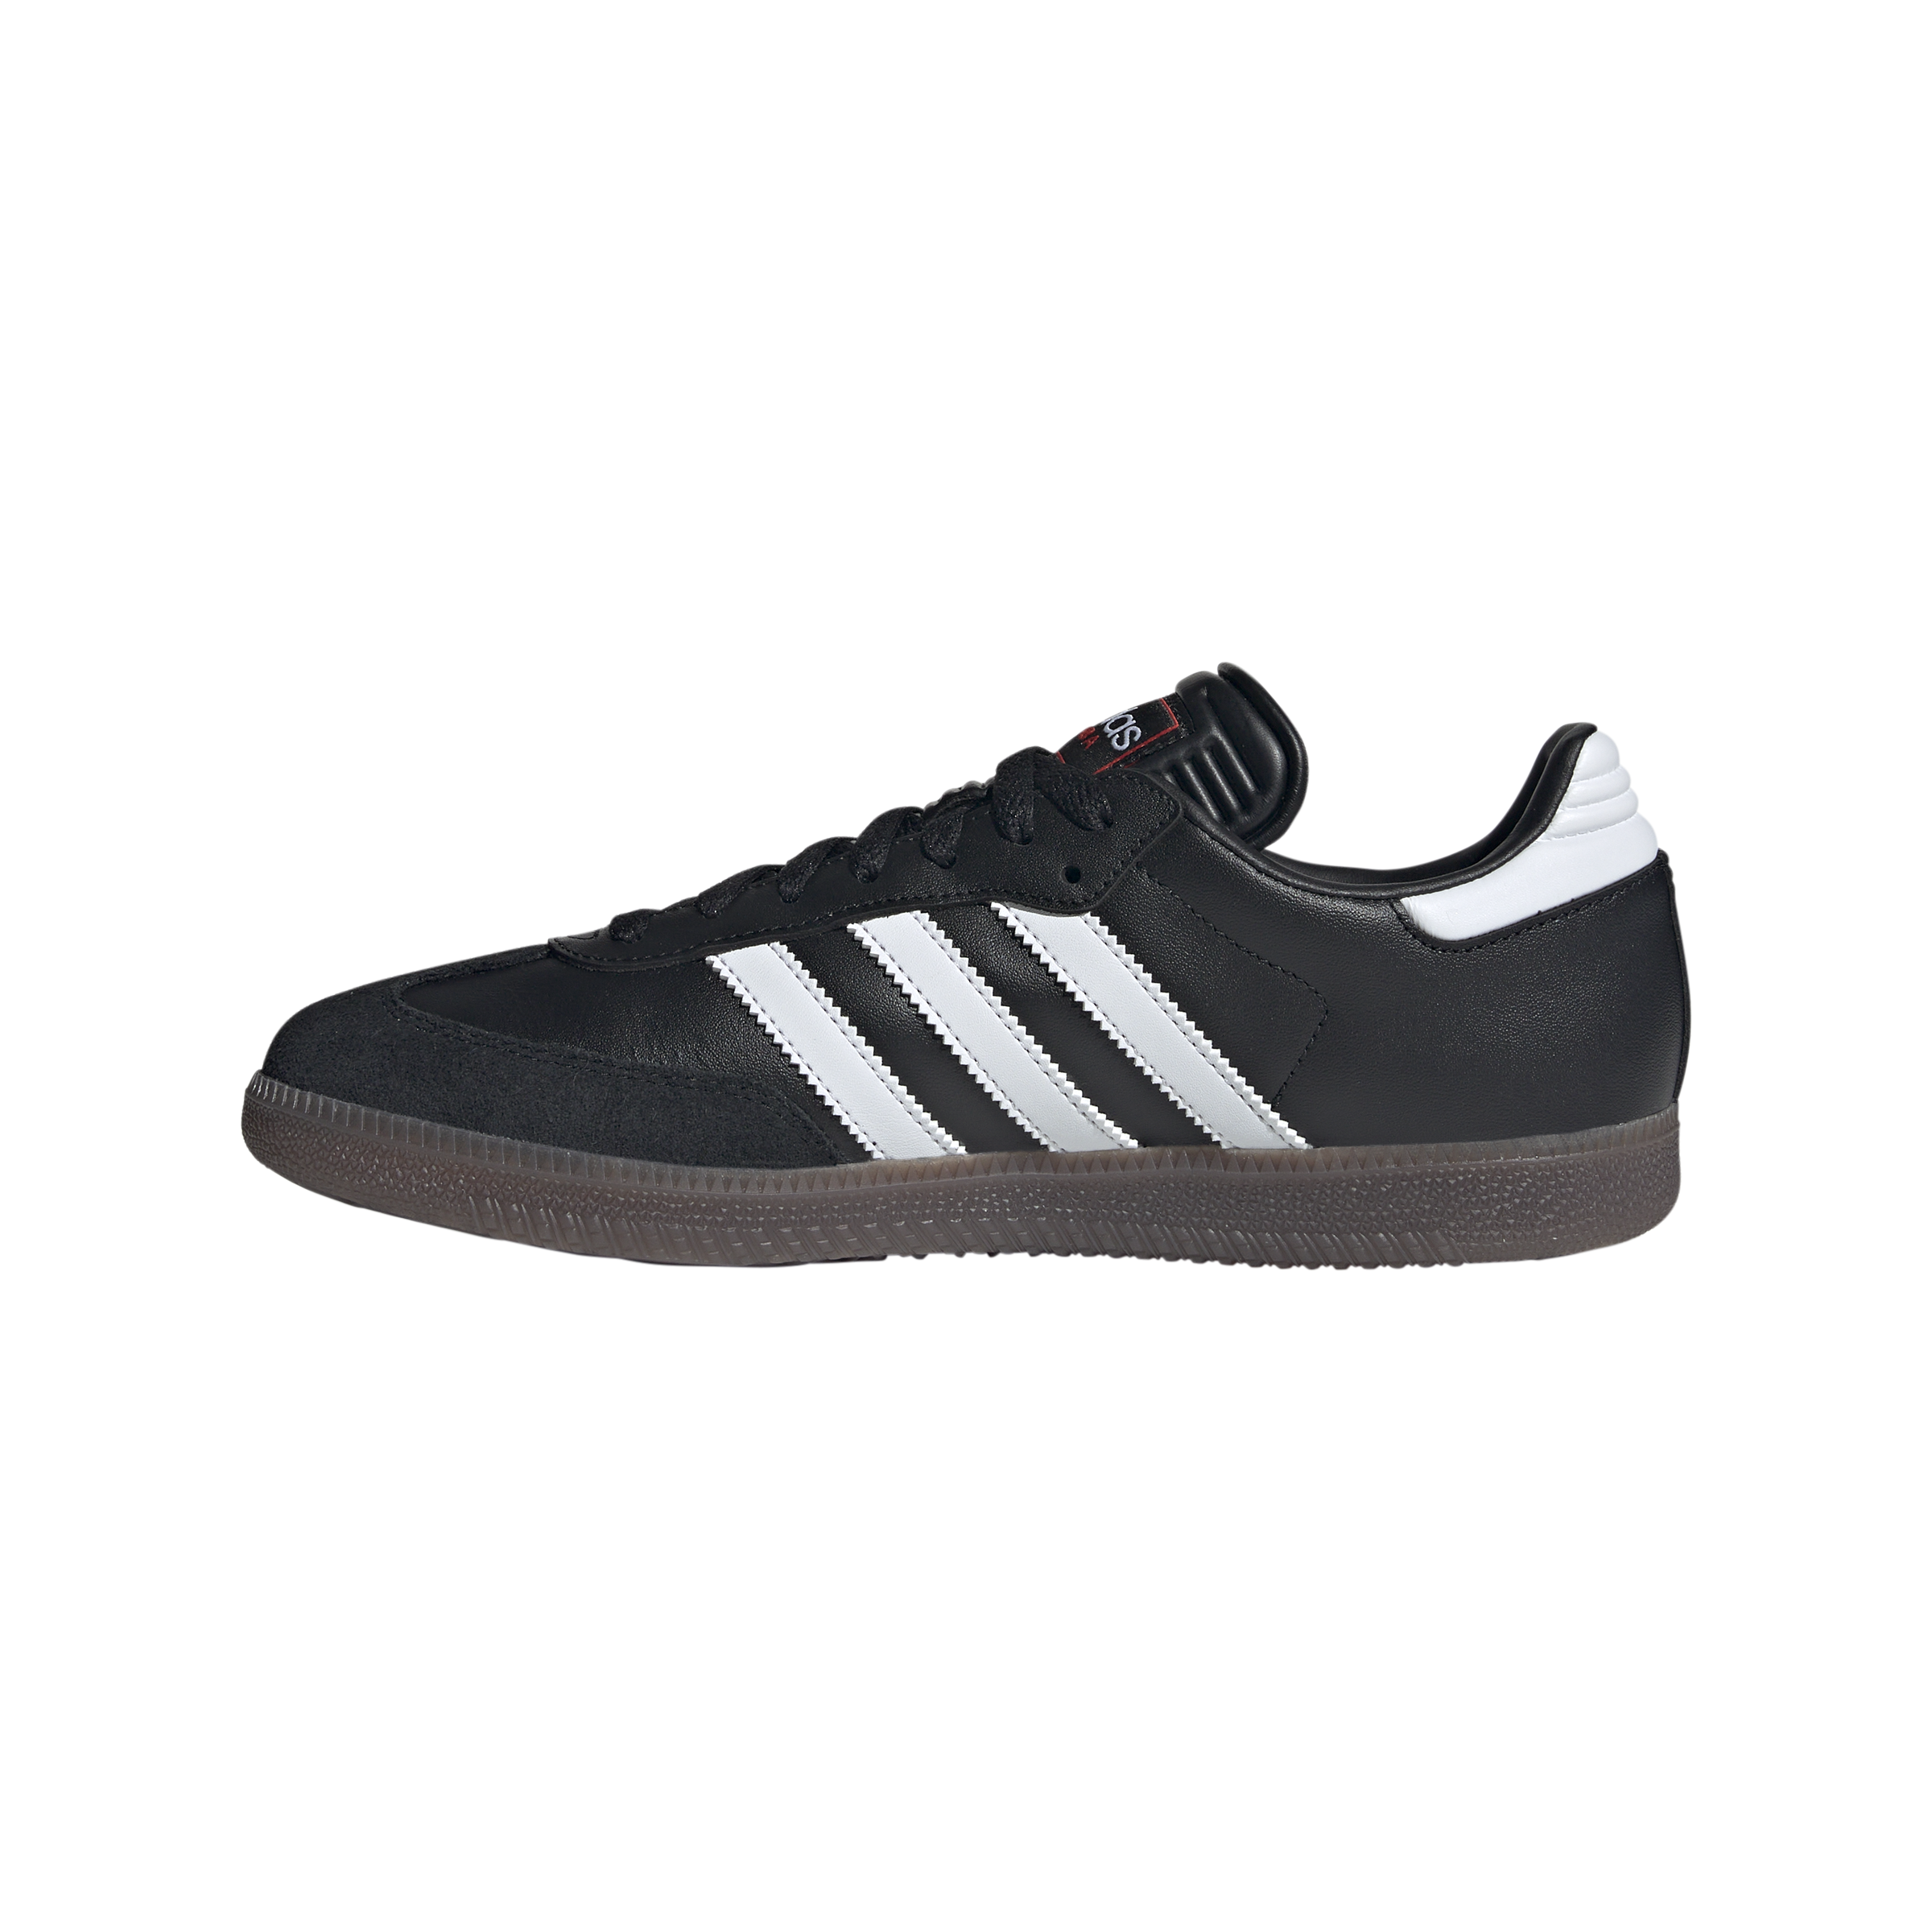 Adidas Samba Indoor Soccer Shoes-Black